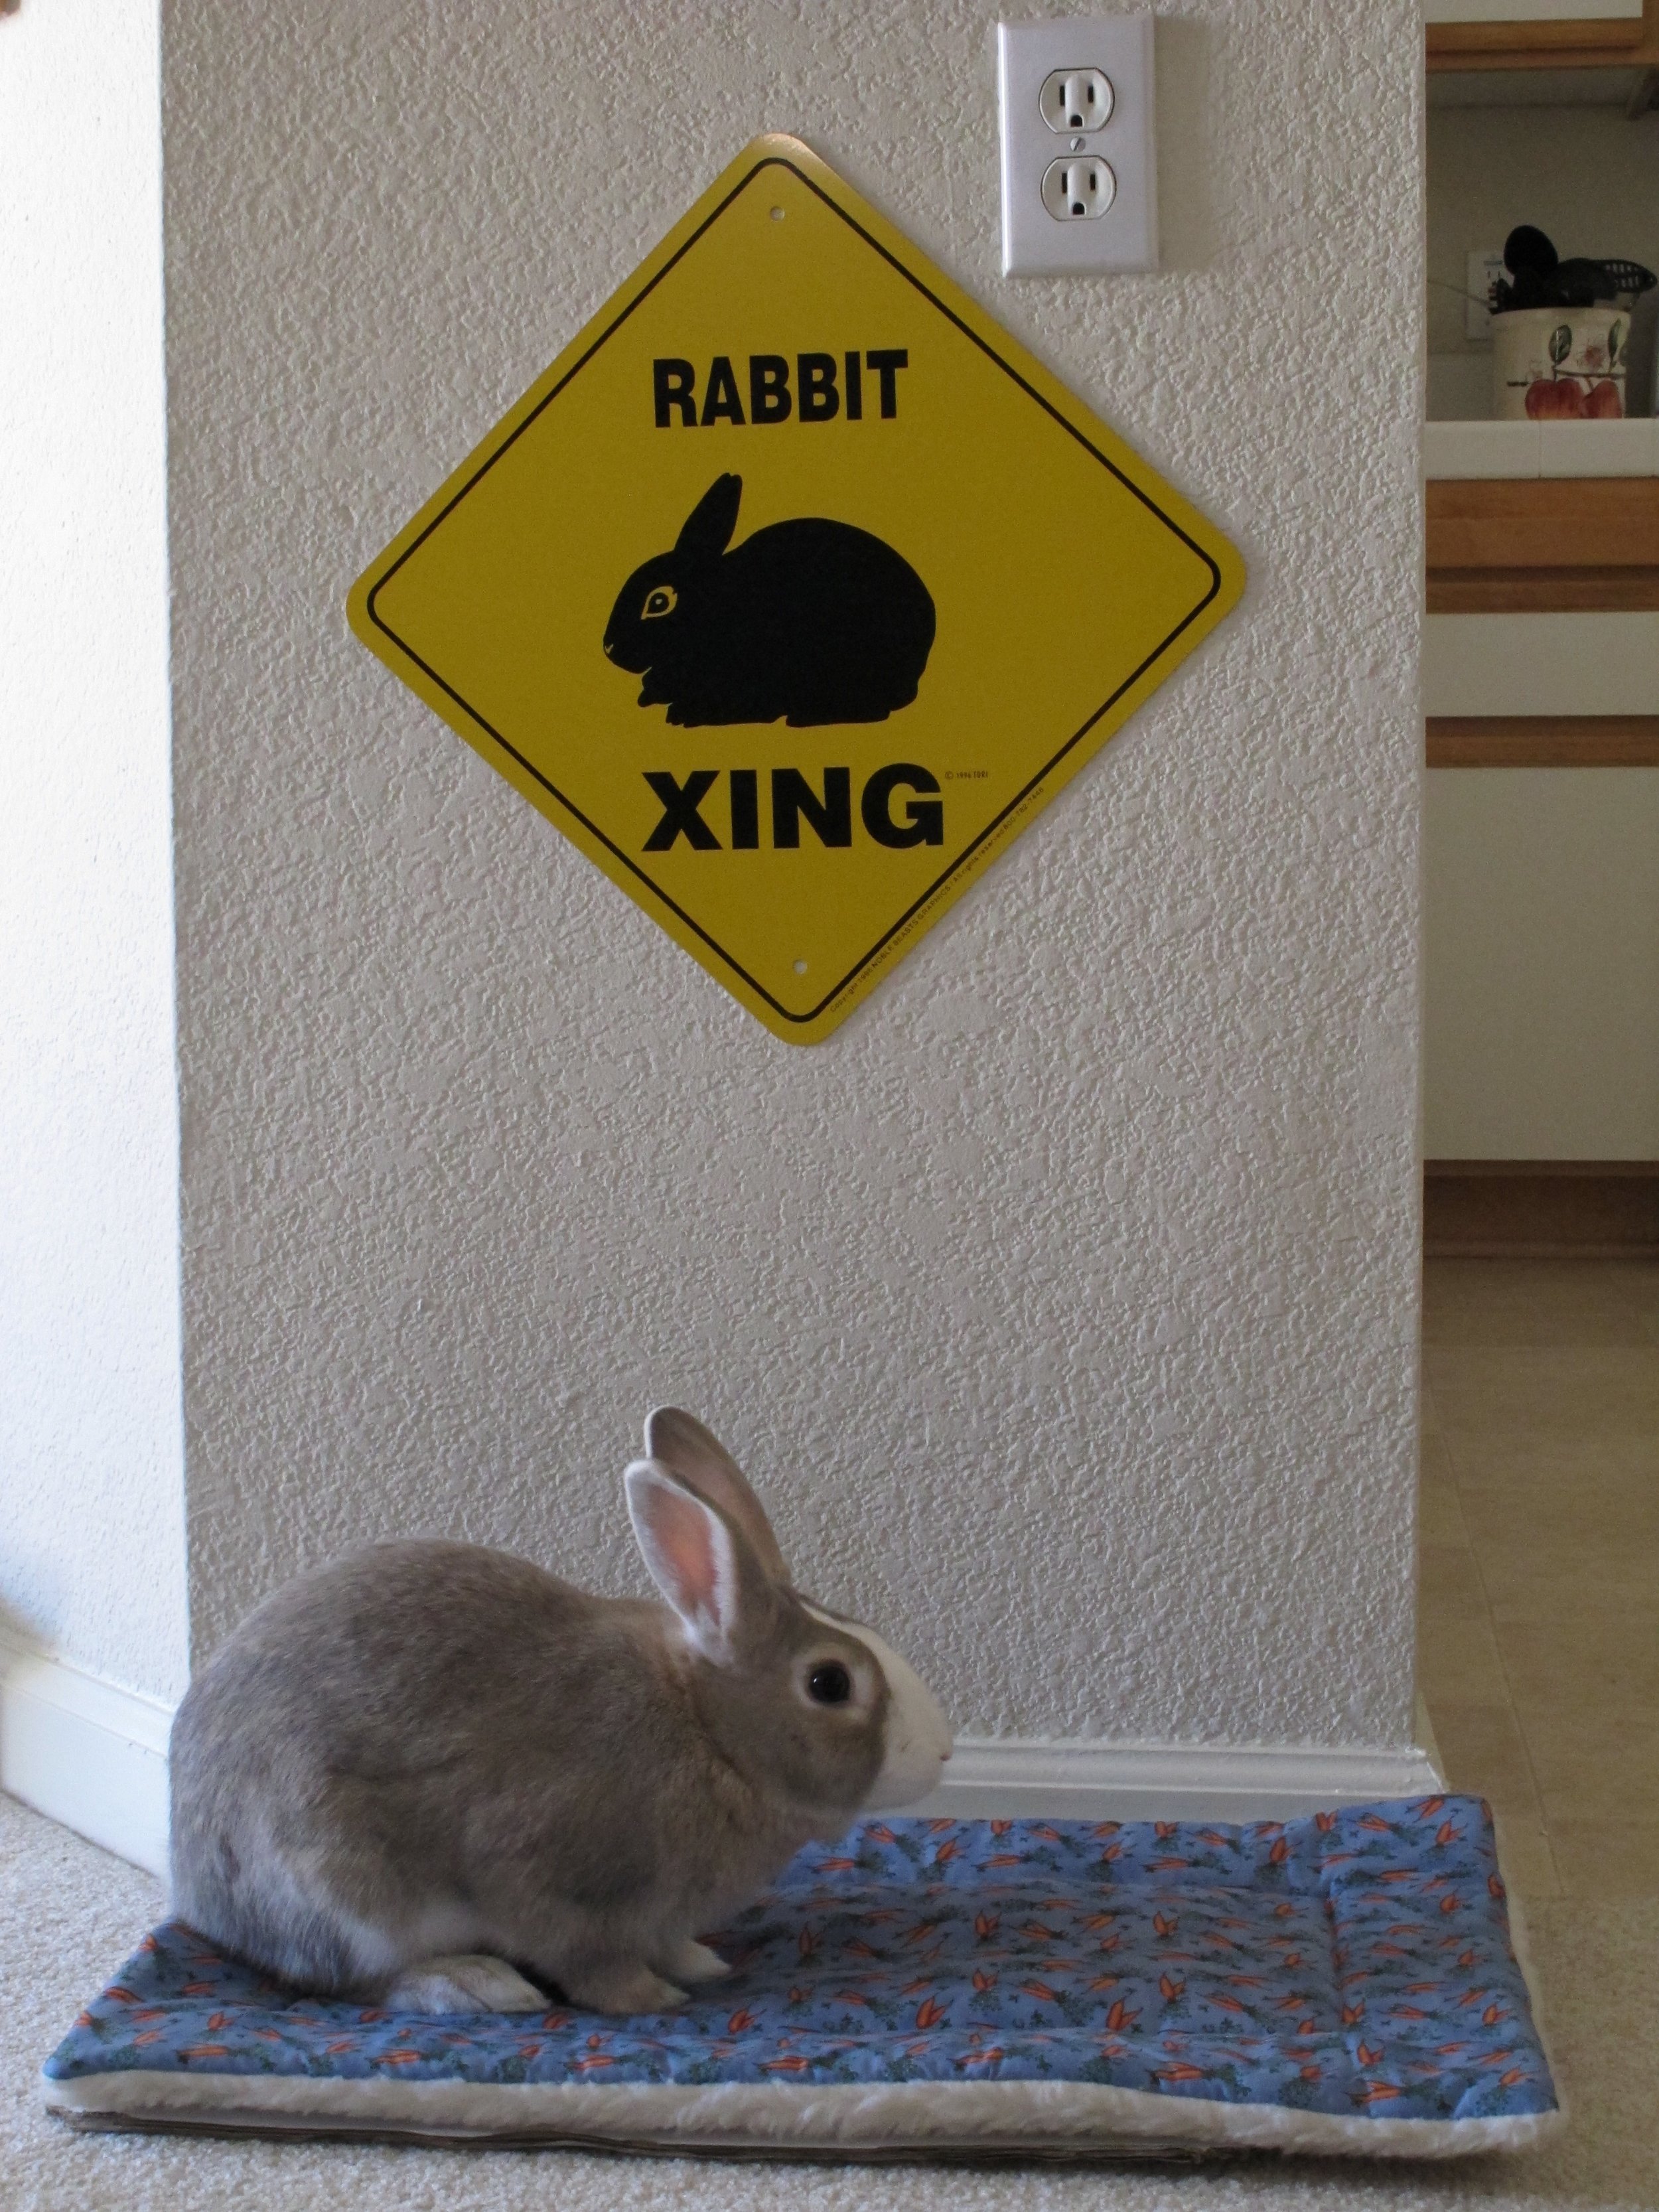 Bunny Has the Right of Way